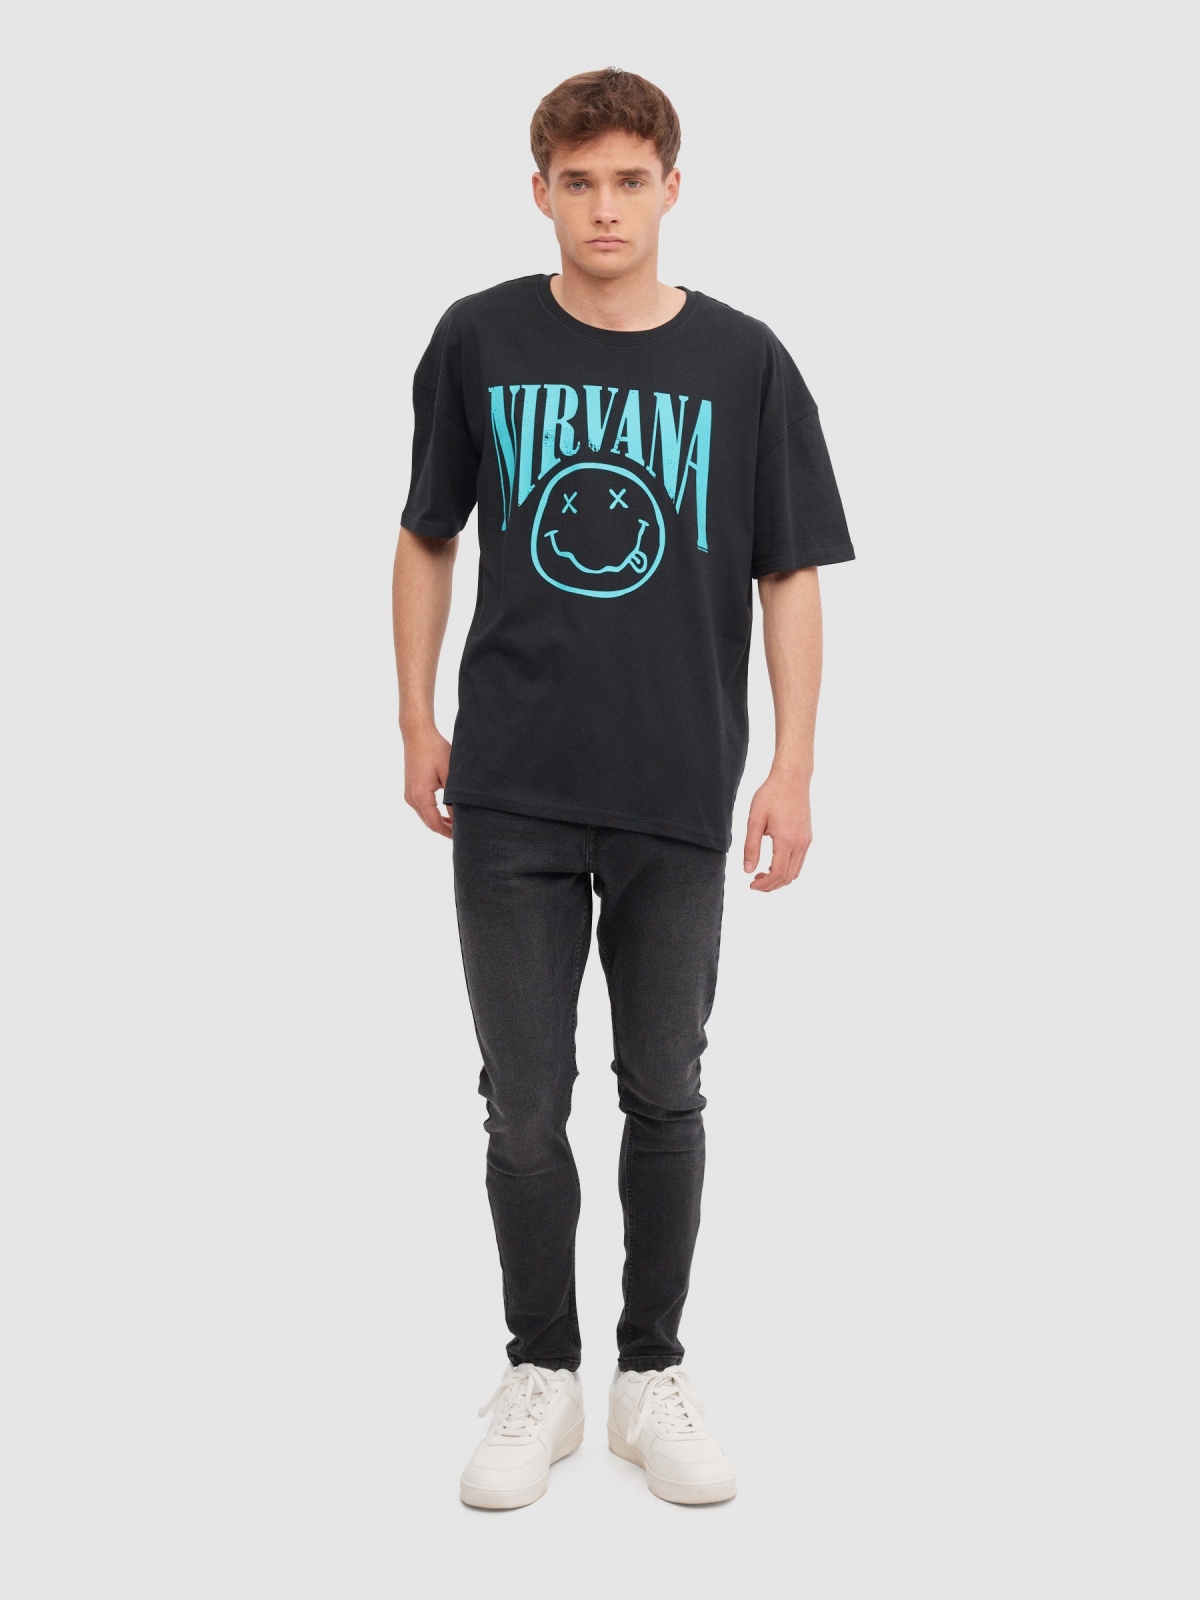 Nirvana t-shirt black front view